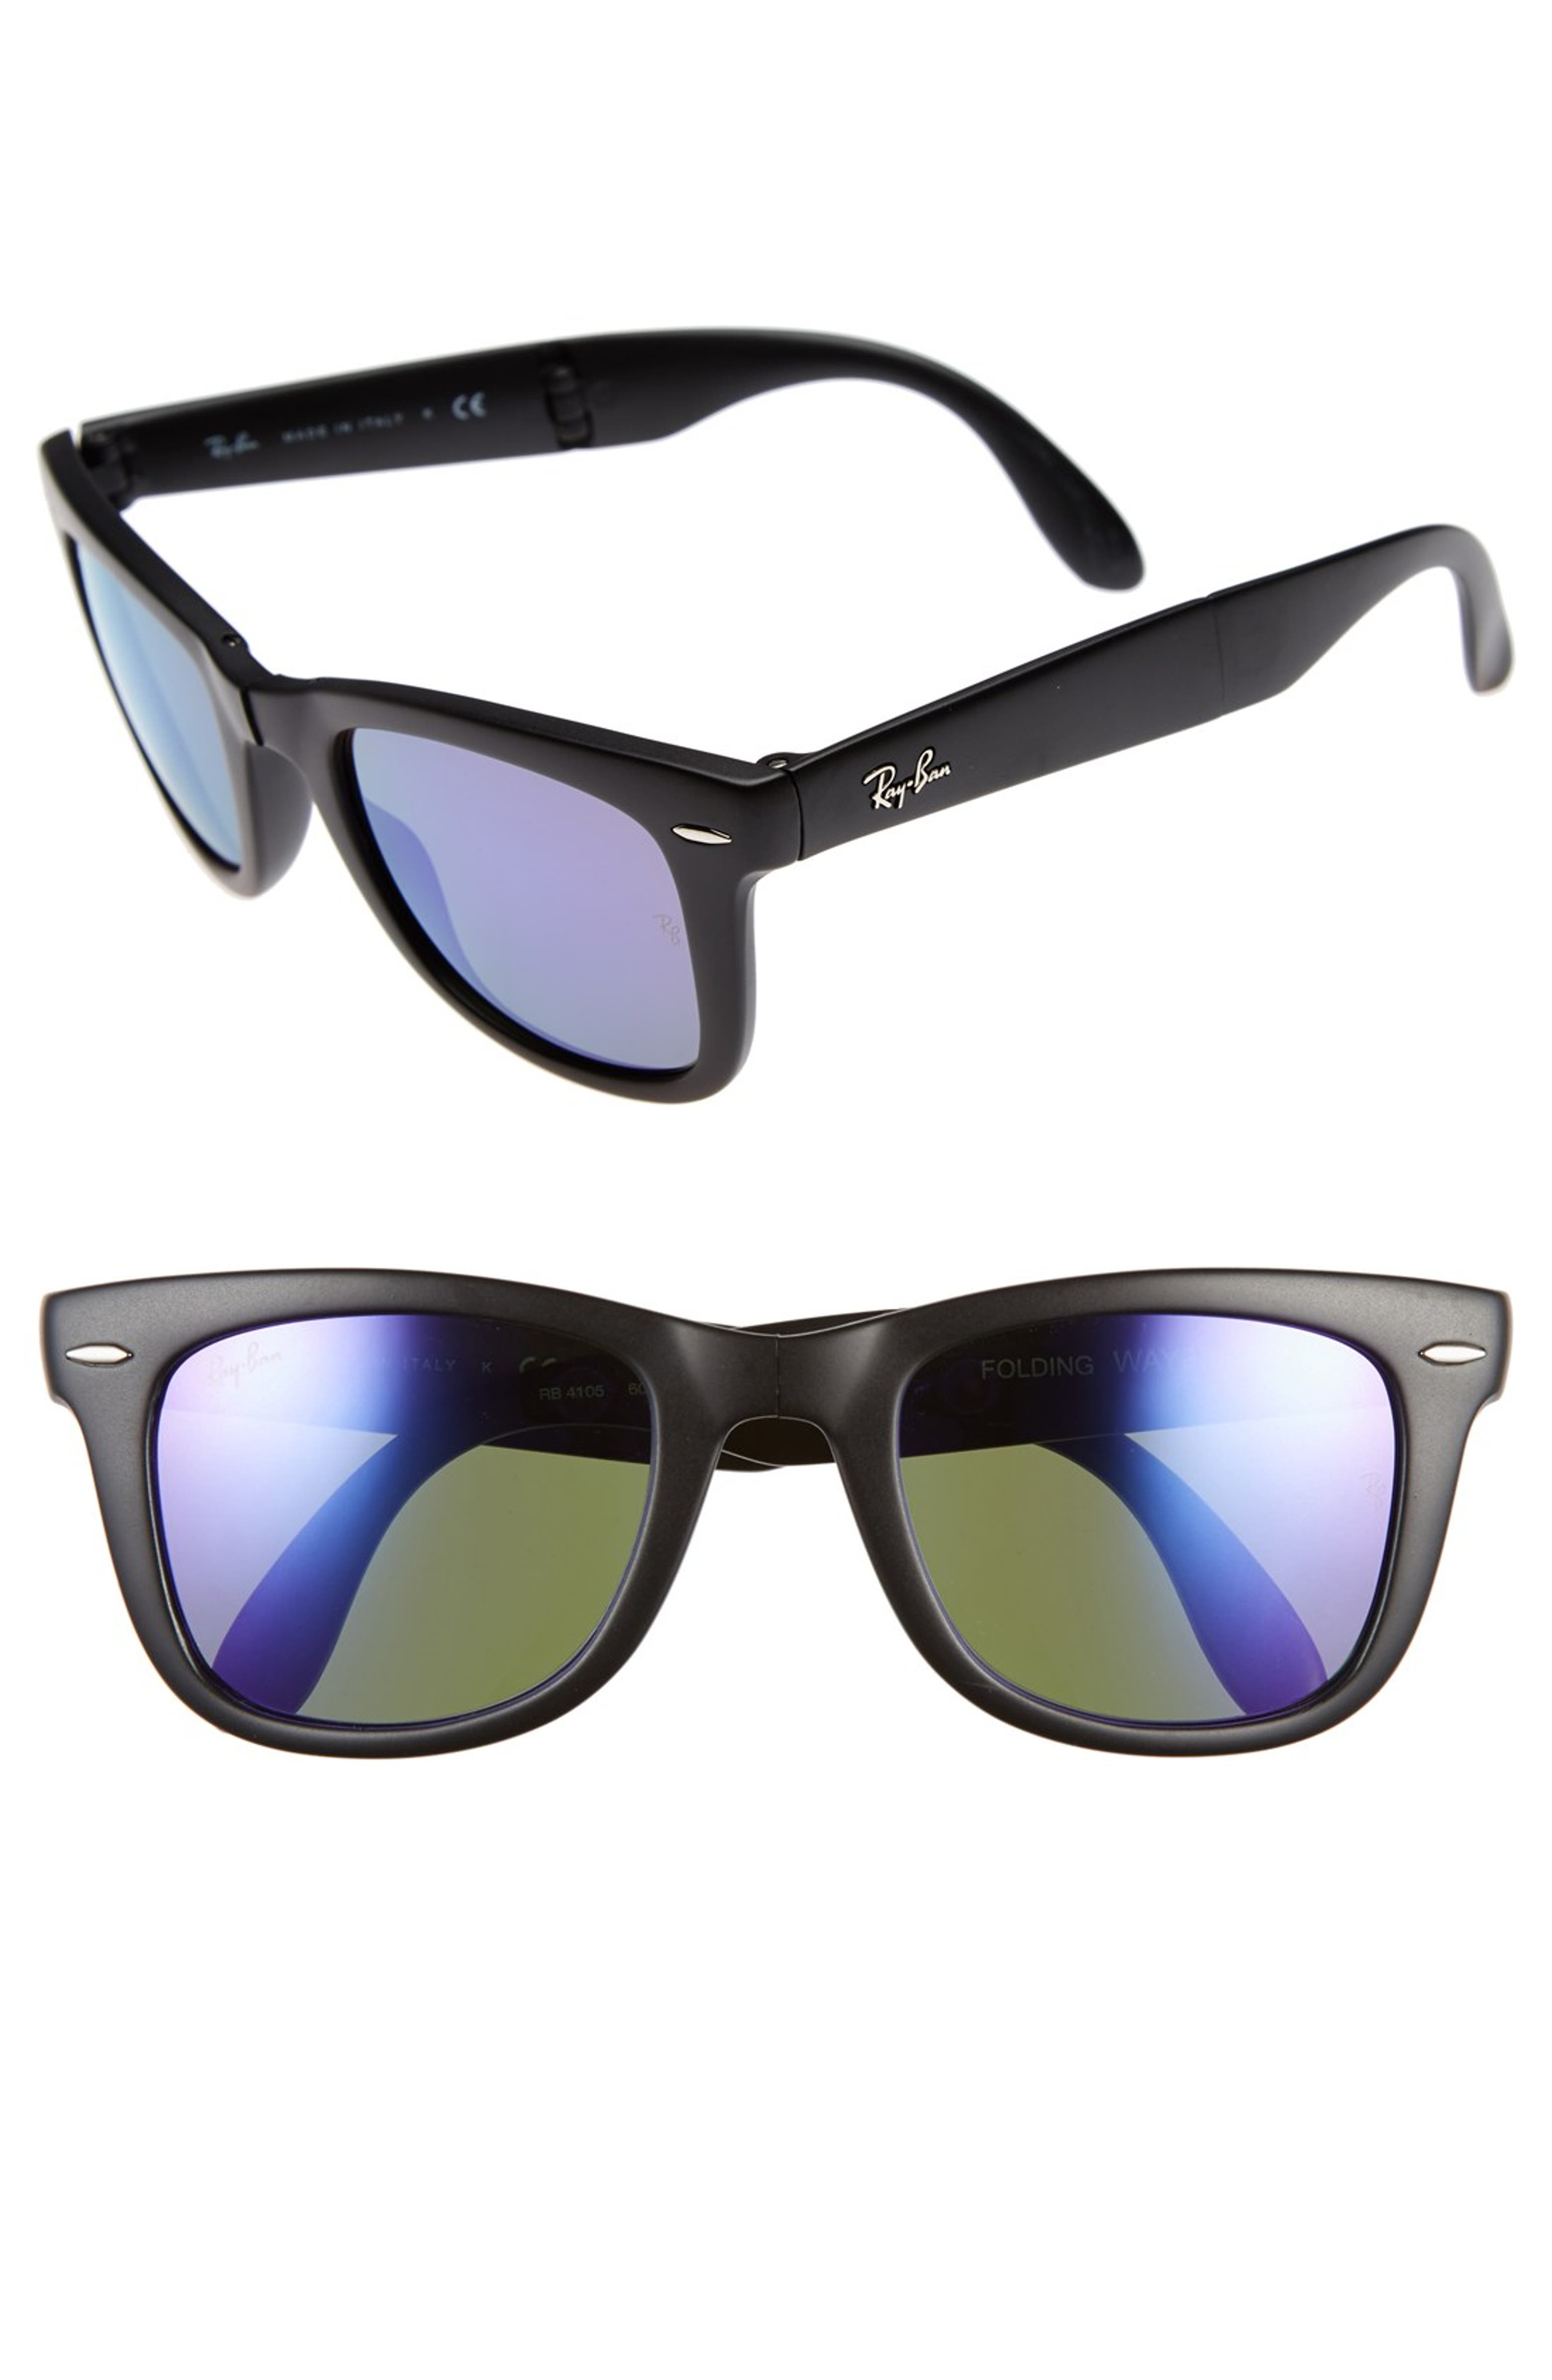 Ray Ban Folding Wayfarer 50mm Sunglasses Nordstrom Exclusive Nordstrom